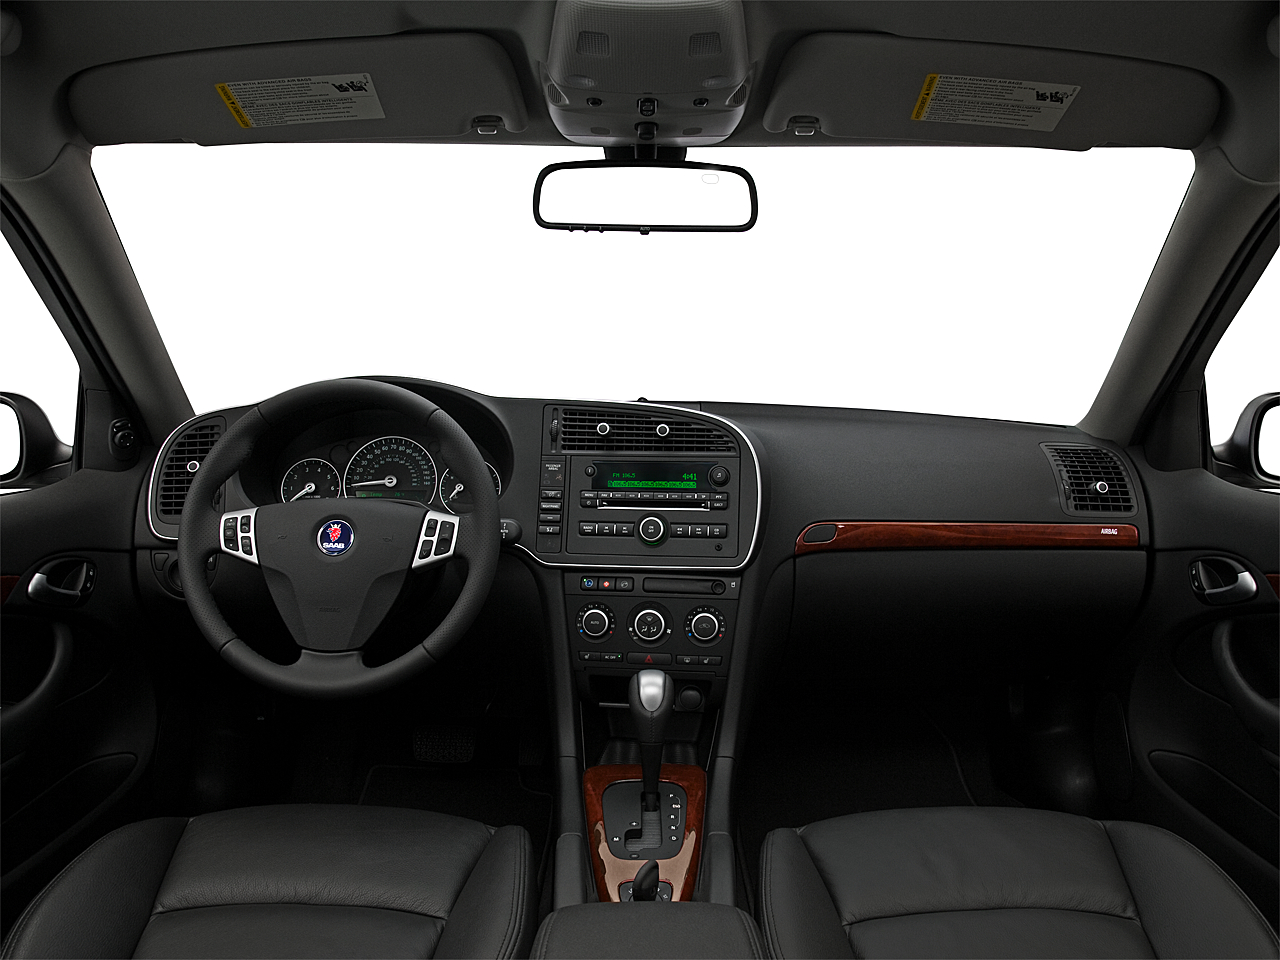 2009 Saab 9-3 AWD 2.0T XWD 4dr Sedan - Research - GrooveCar